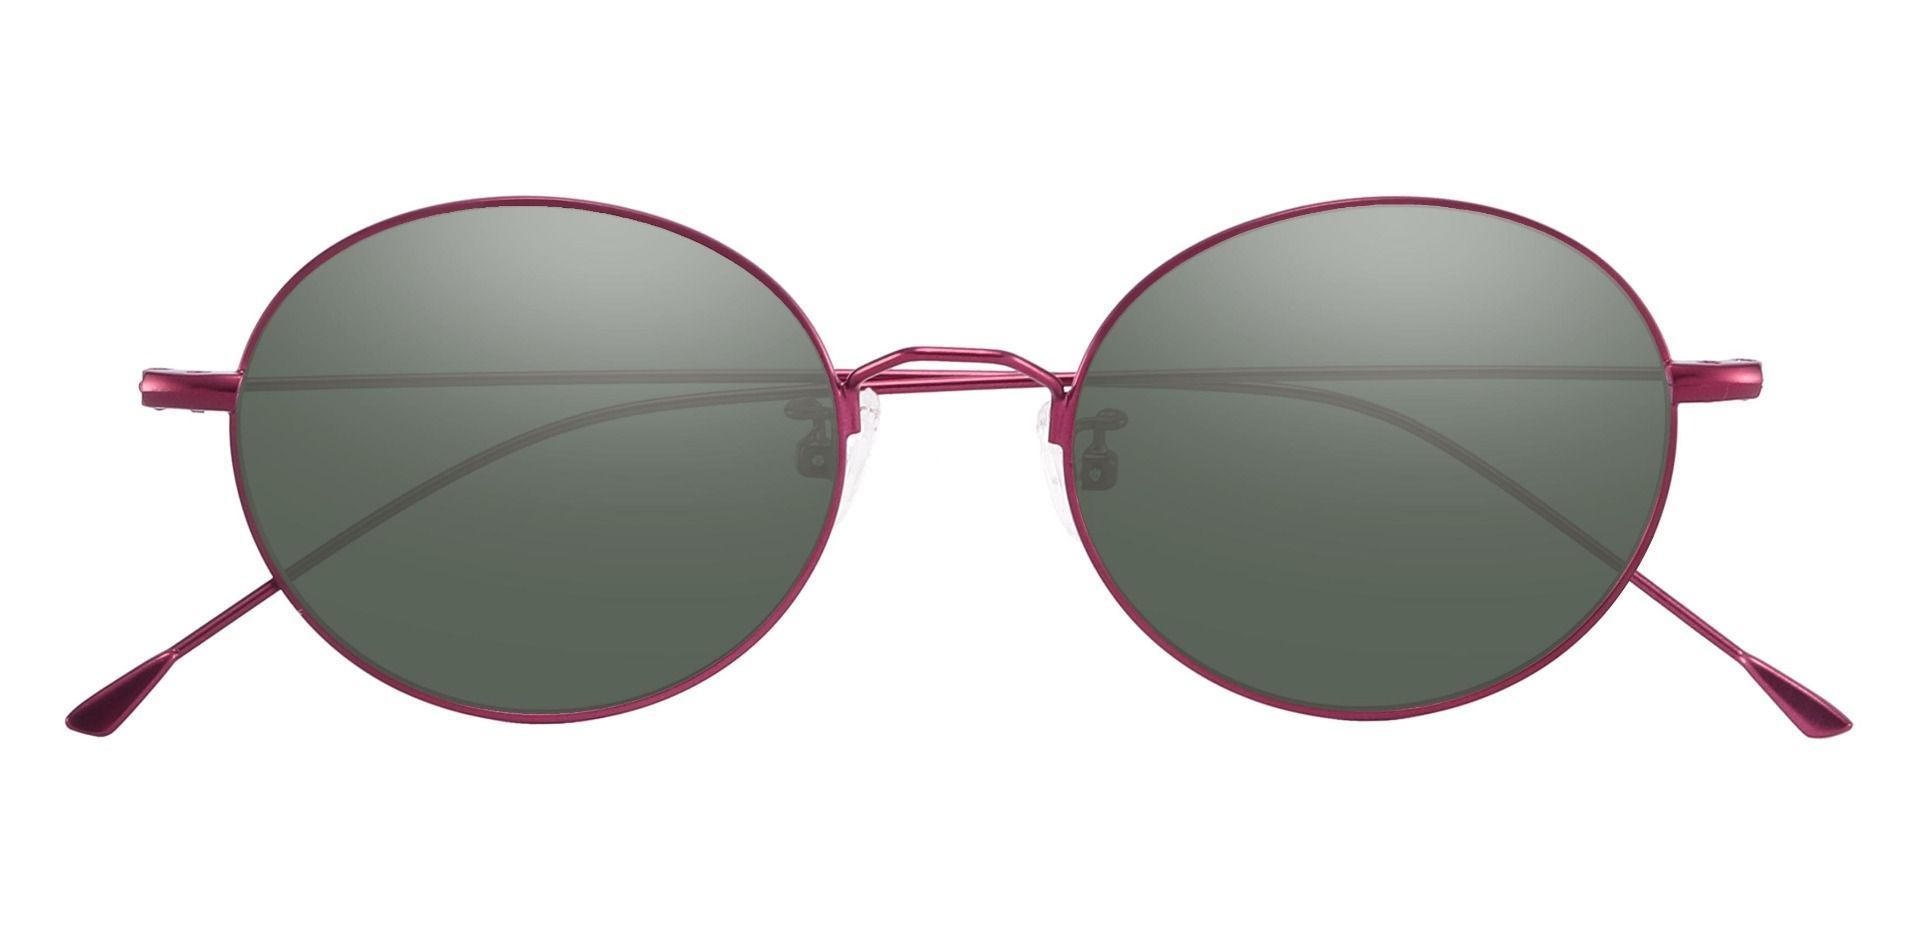 Arden Round Progressive Sunglasses - Purple Frame With Green Lenses